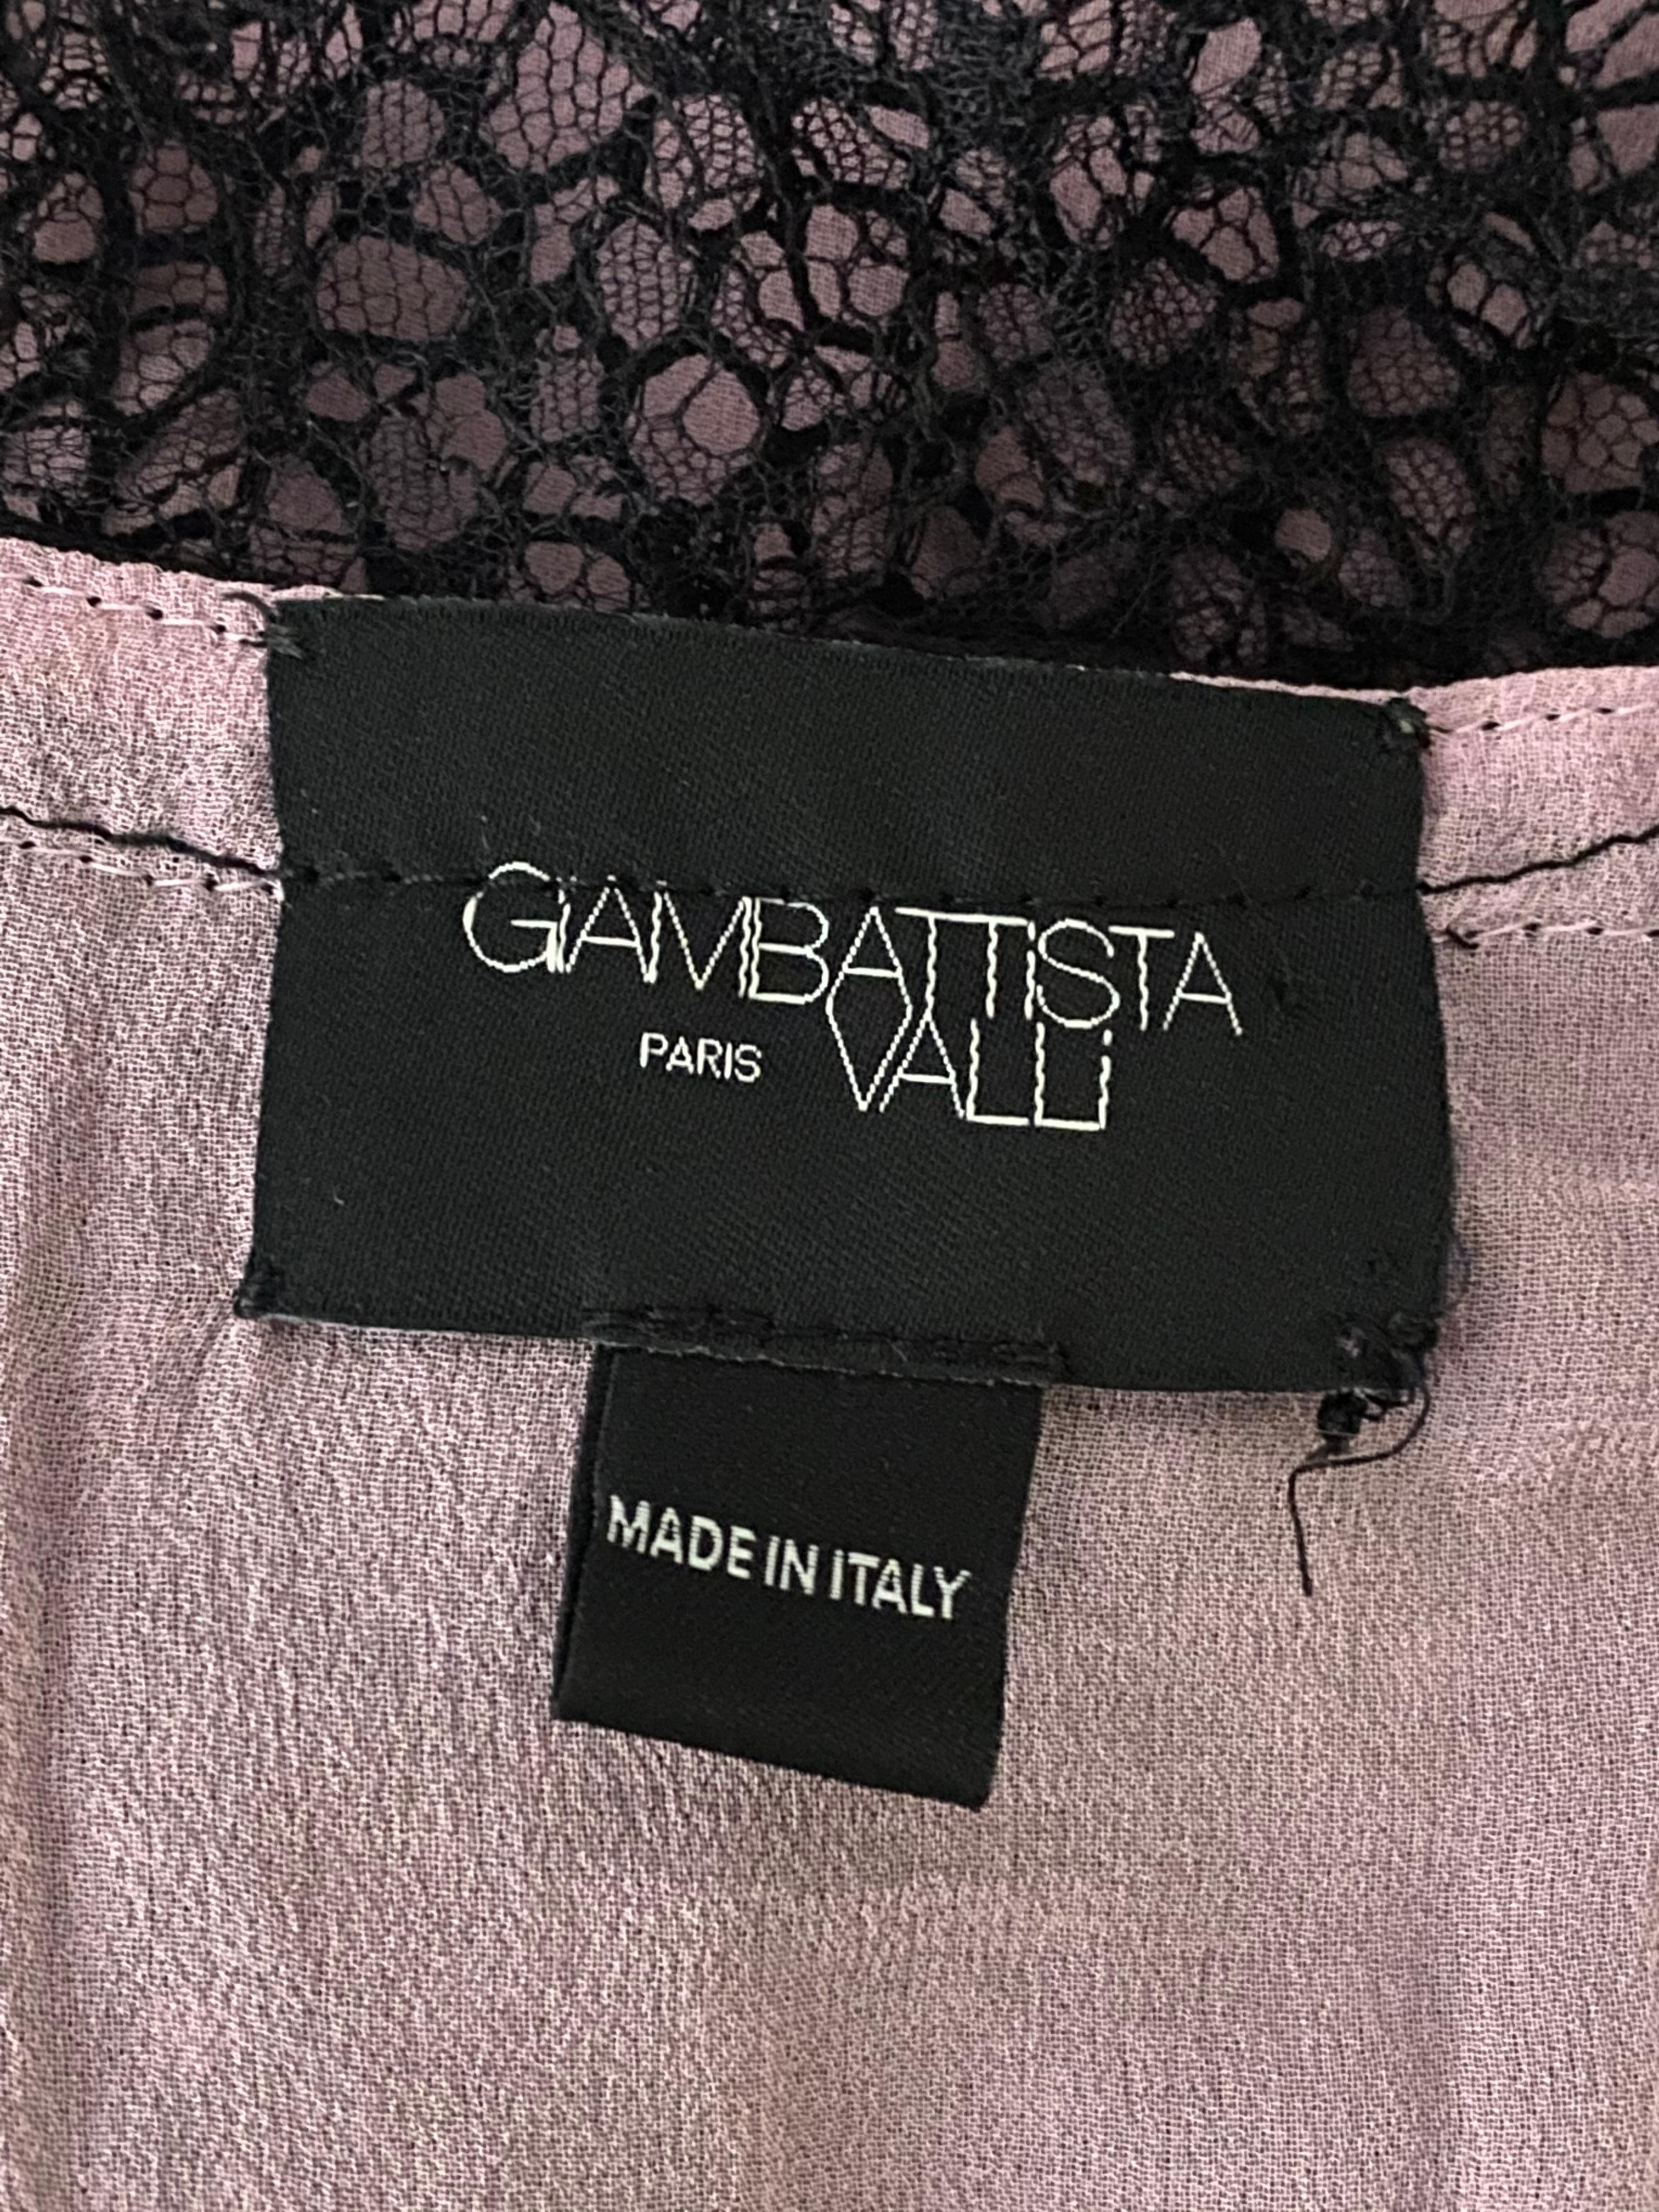 Giambattista Valli Paris Pink and Black Sleeveless Maxi Dress Size 40 5